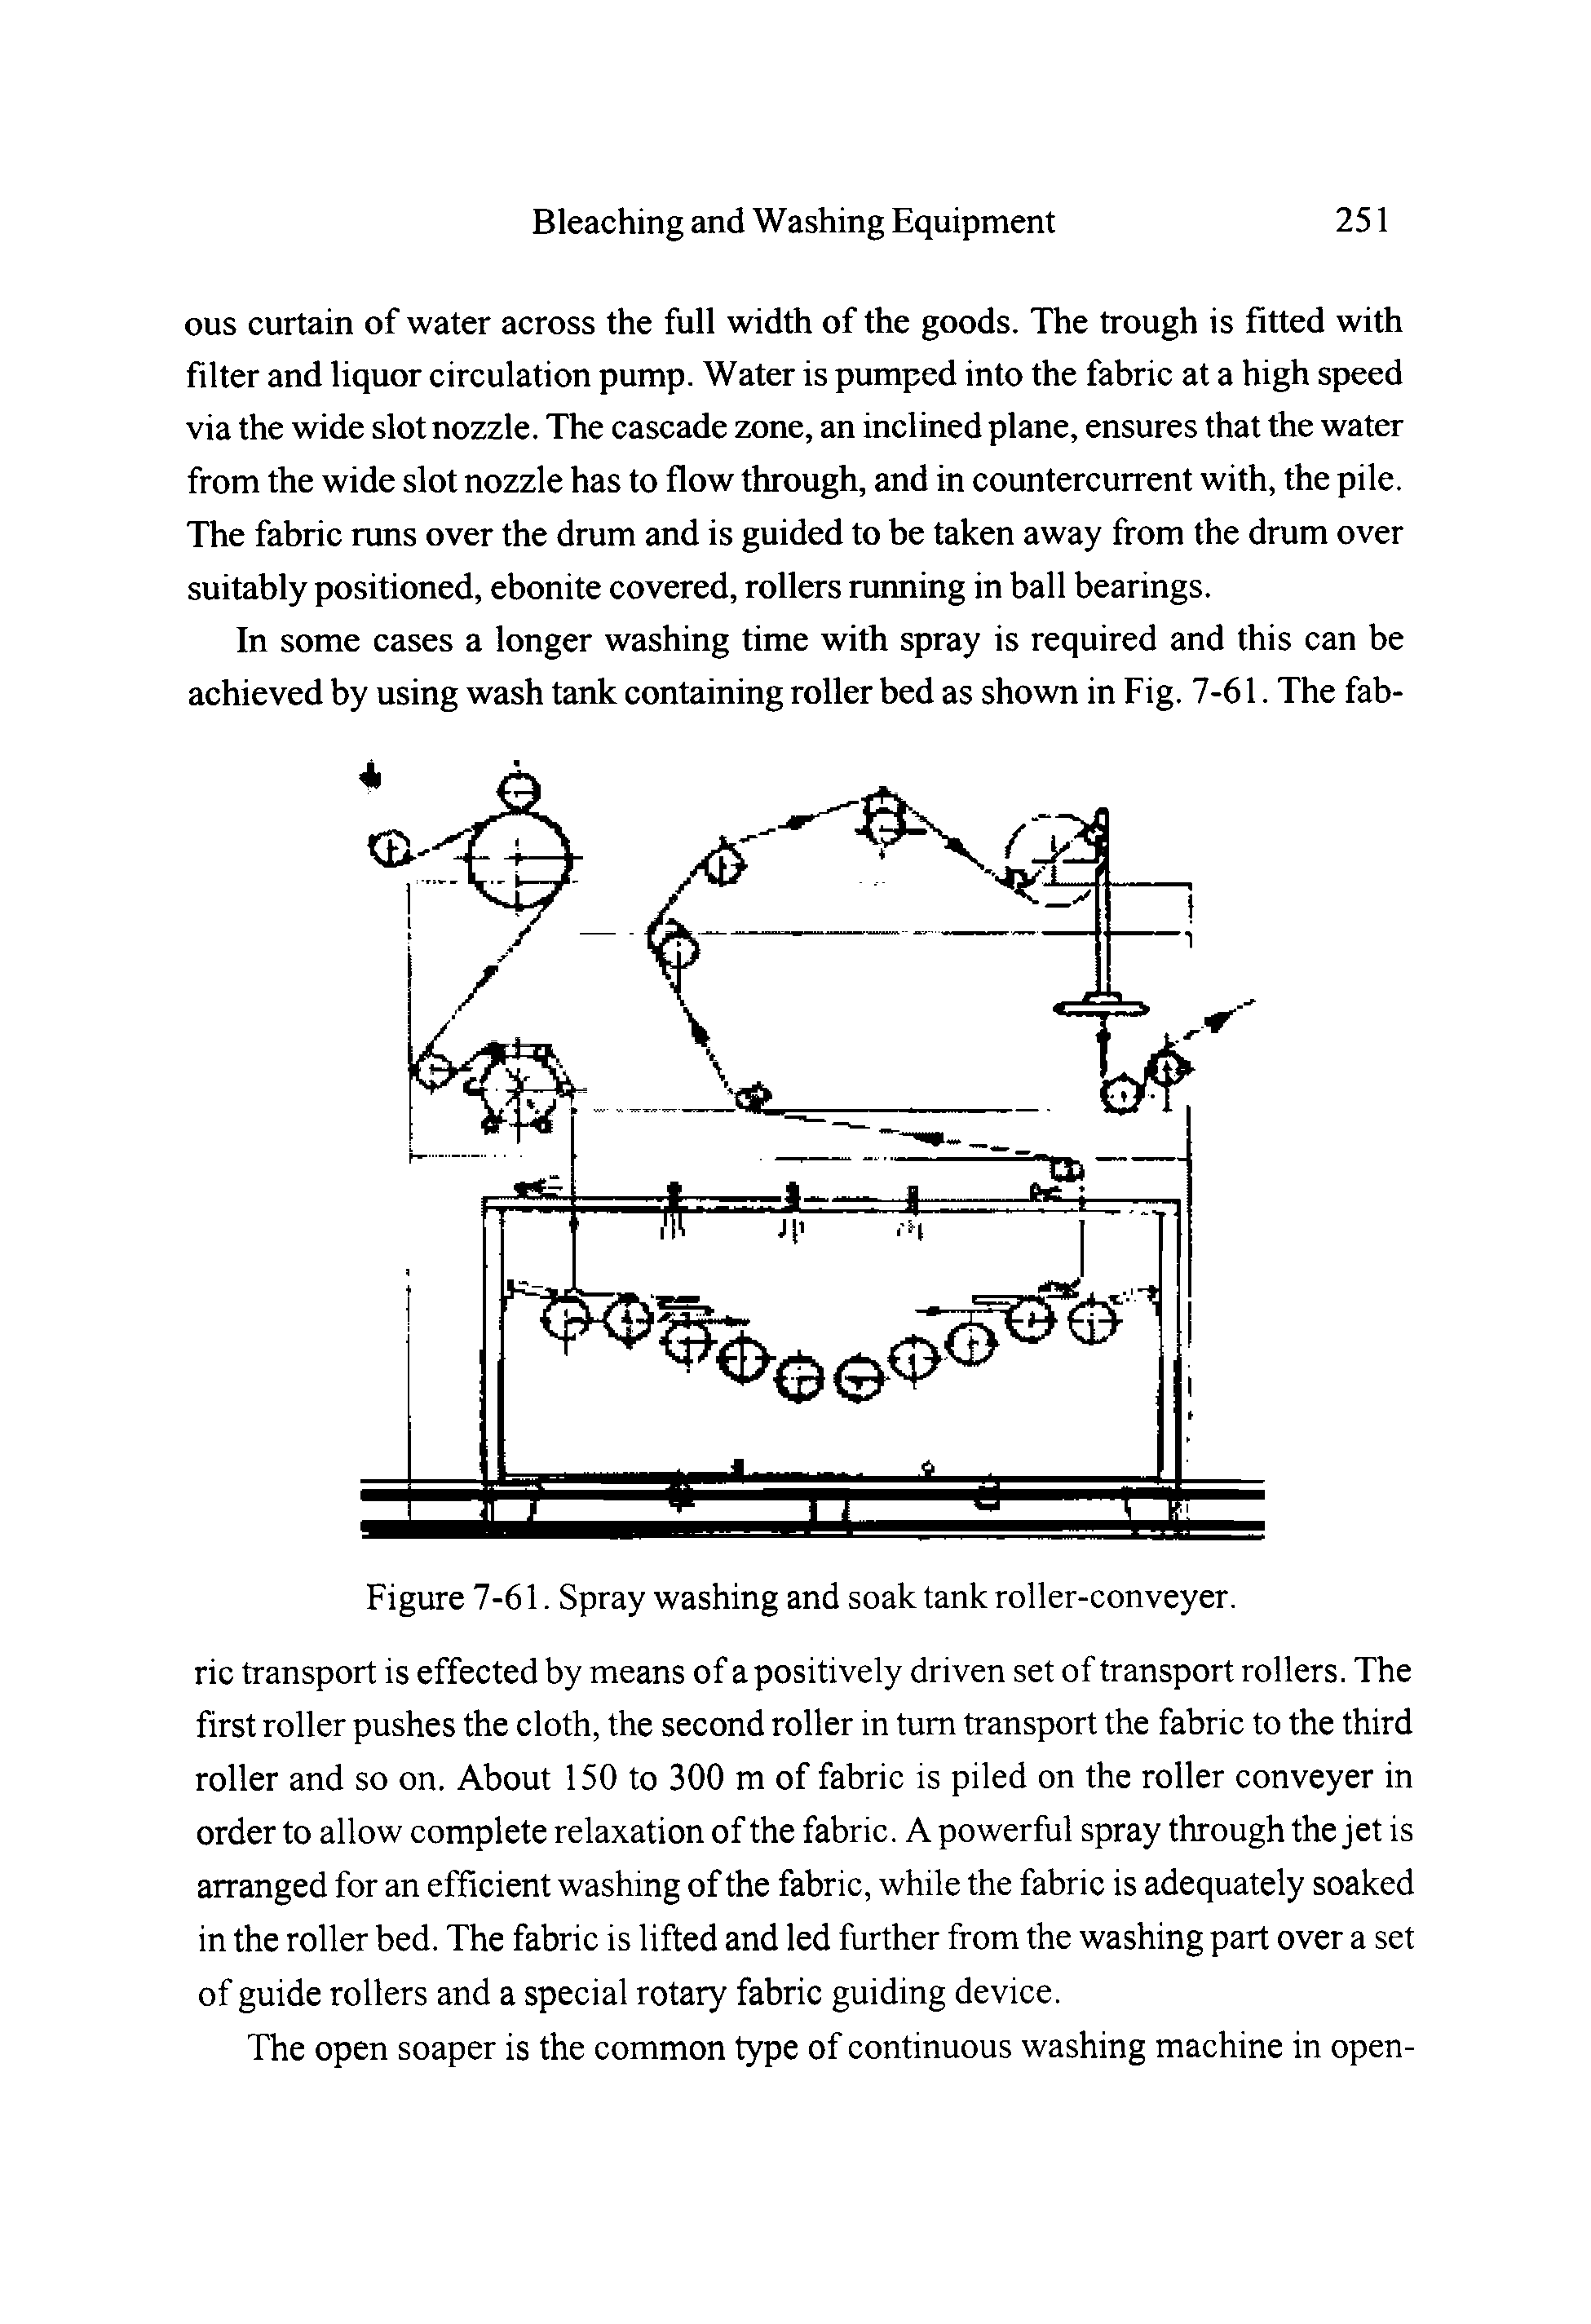 Figure 7-61. Spray washing and soak tank roller-conveyer.